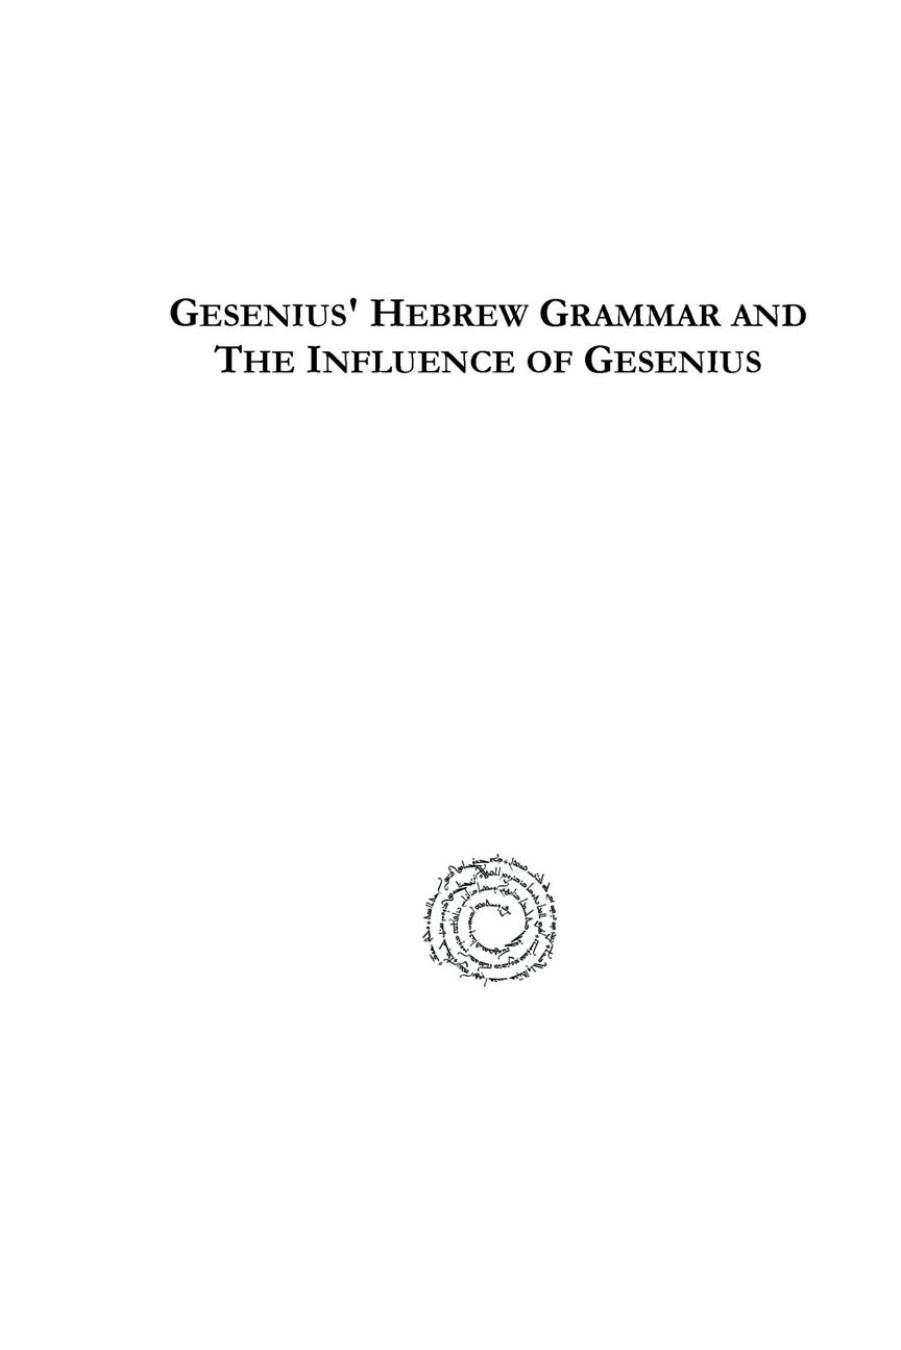 Gesenius' Hebrew Grammar and the Influence of Gesenius (Analecta Gorgiana) (Arabic Edition) by E. Kautzsch